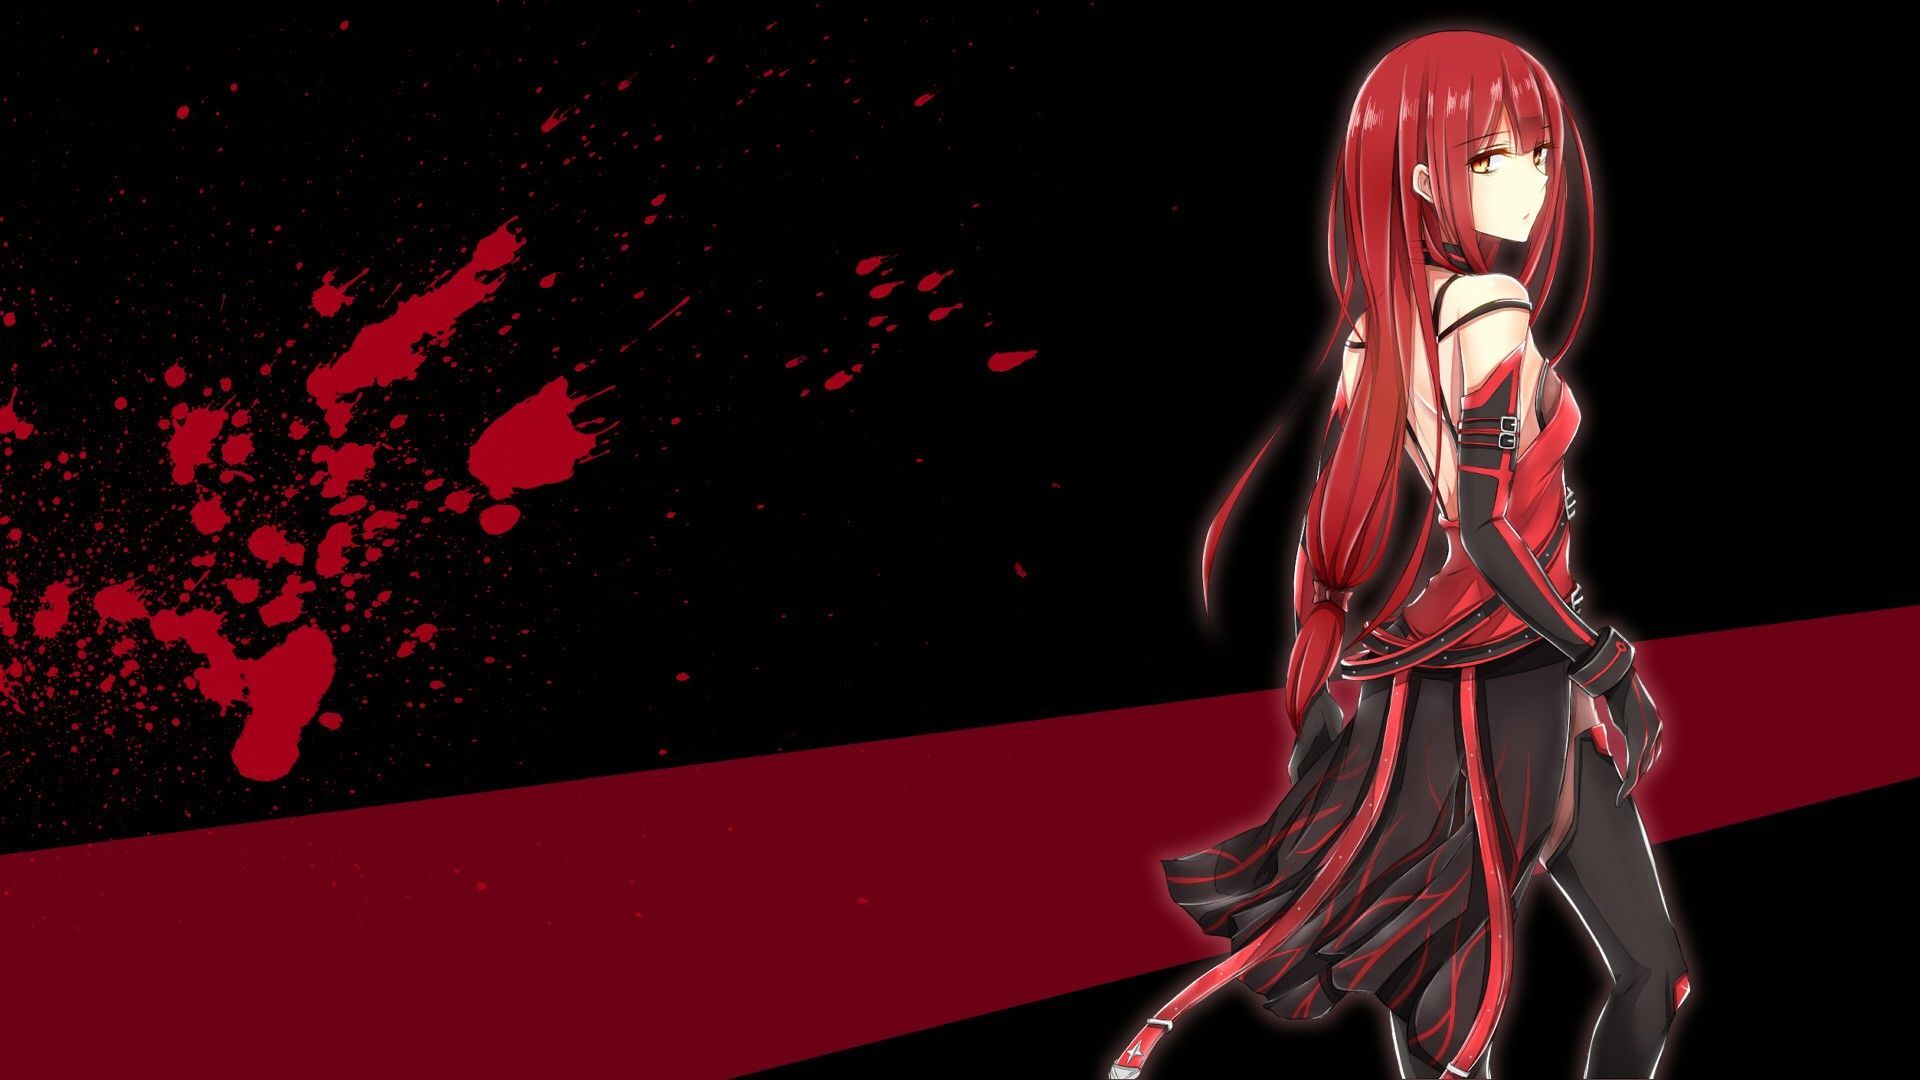 Dark Red Anime Wallpaper Free .wallpaperaccess.com